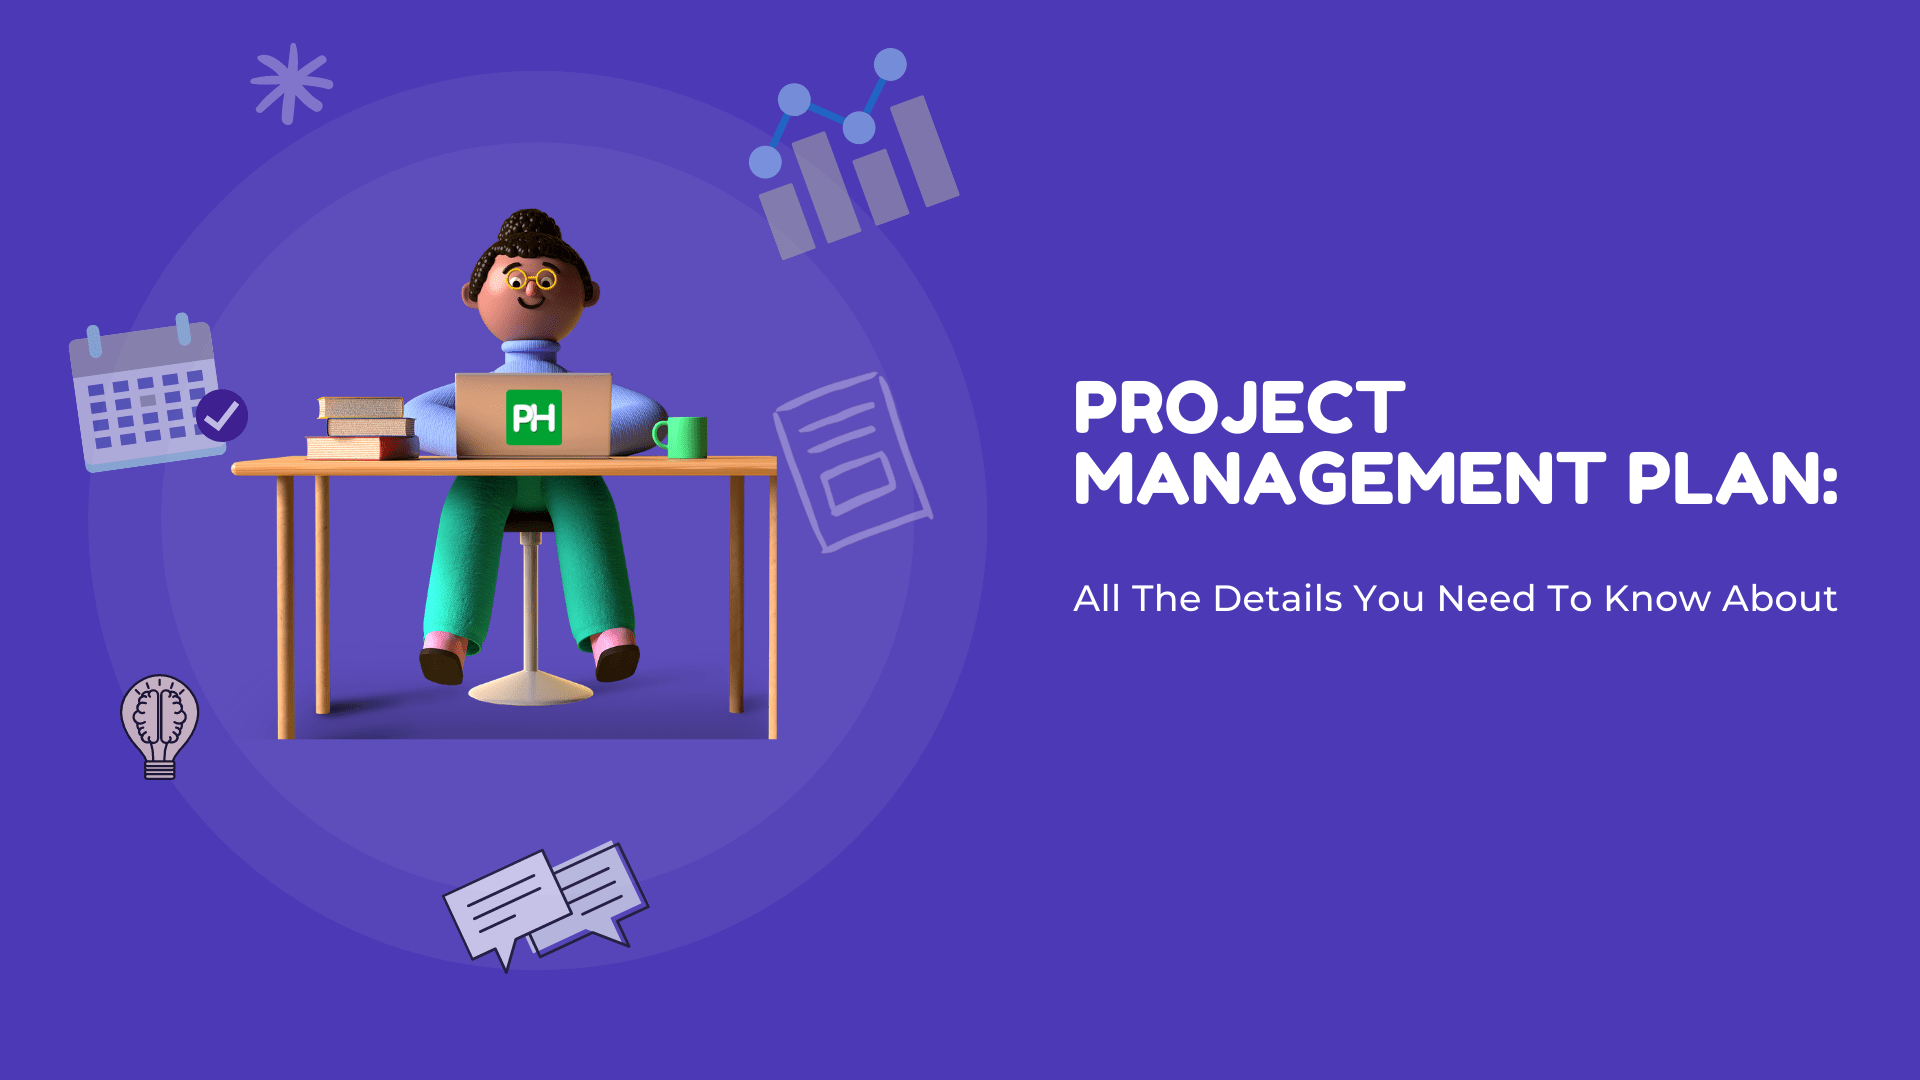 Project management plan guide